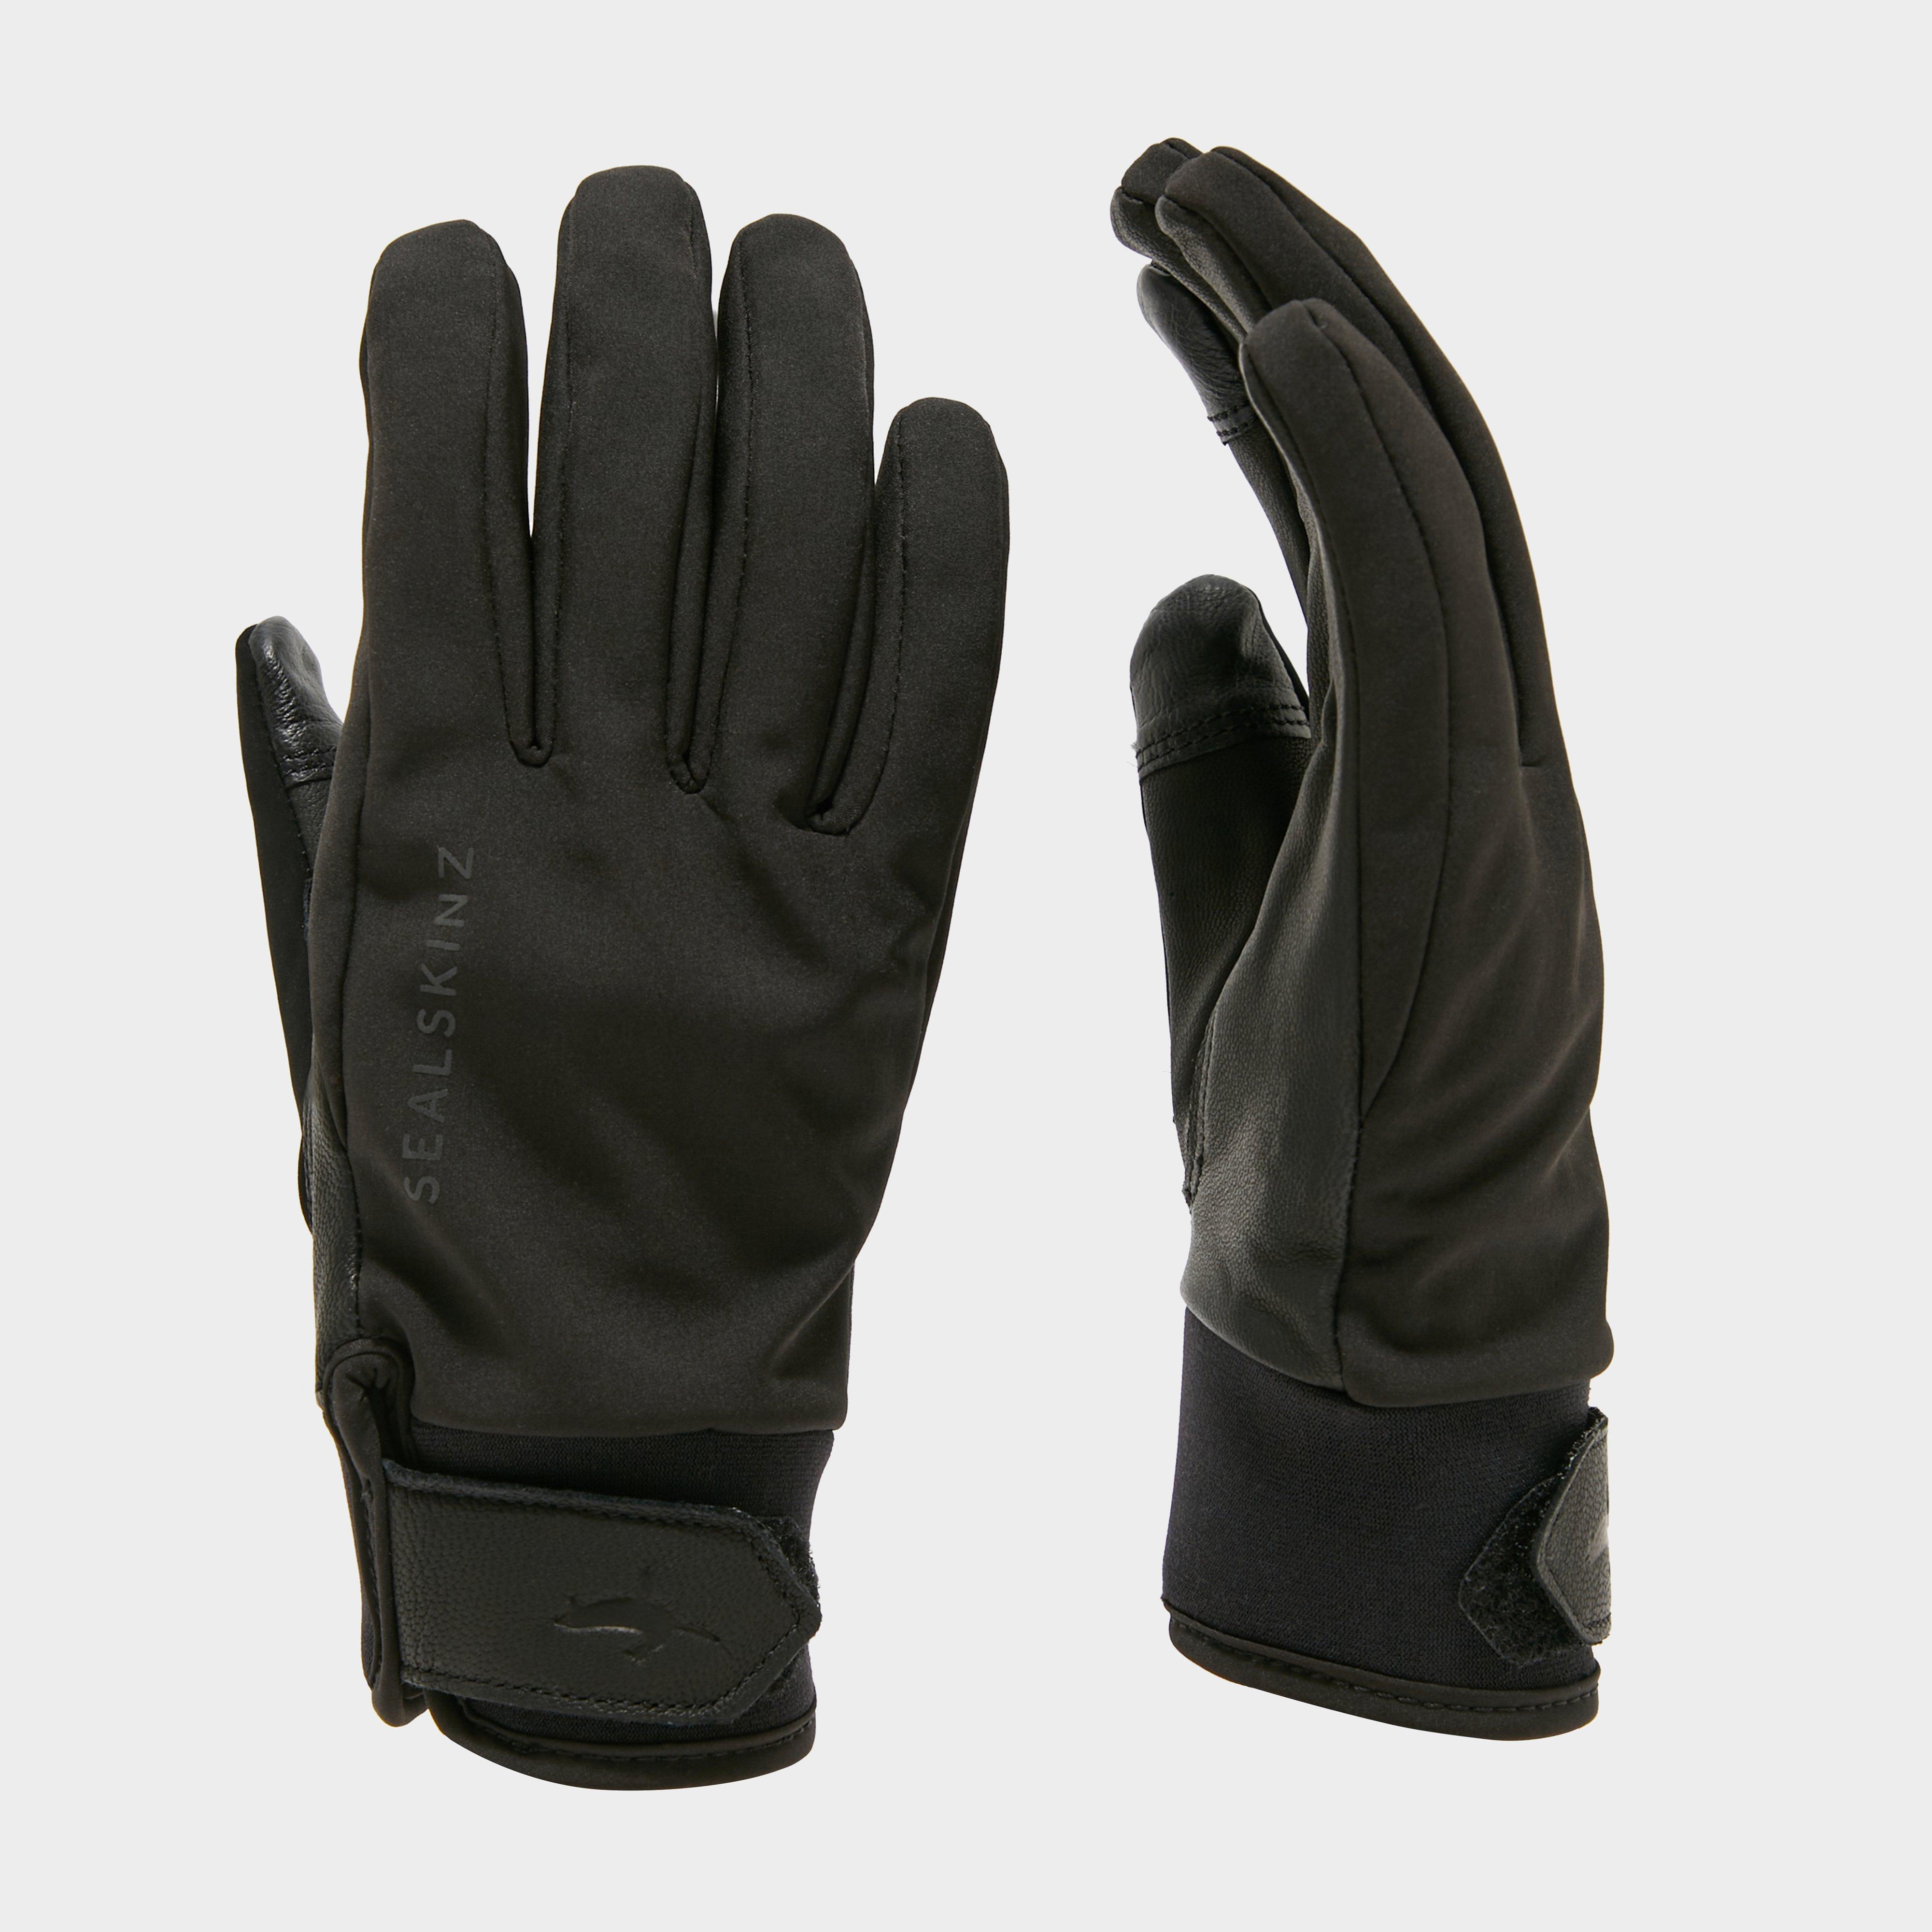 Sealskinz Womens Waterproof All Weather Insulated Glove - Black/glv  Black/glv